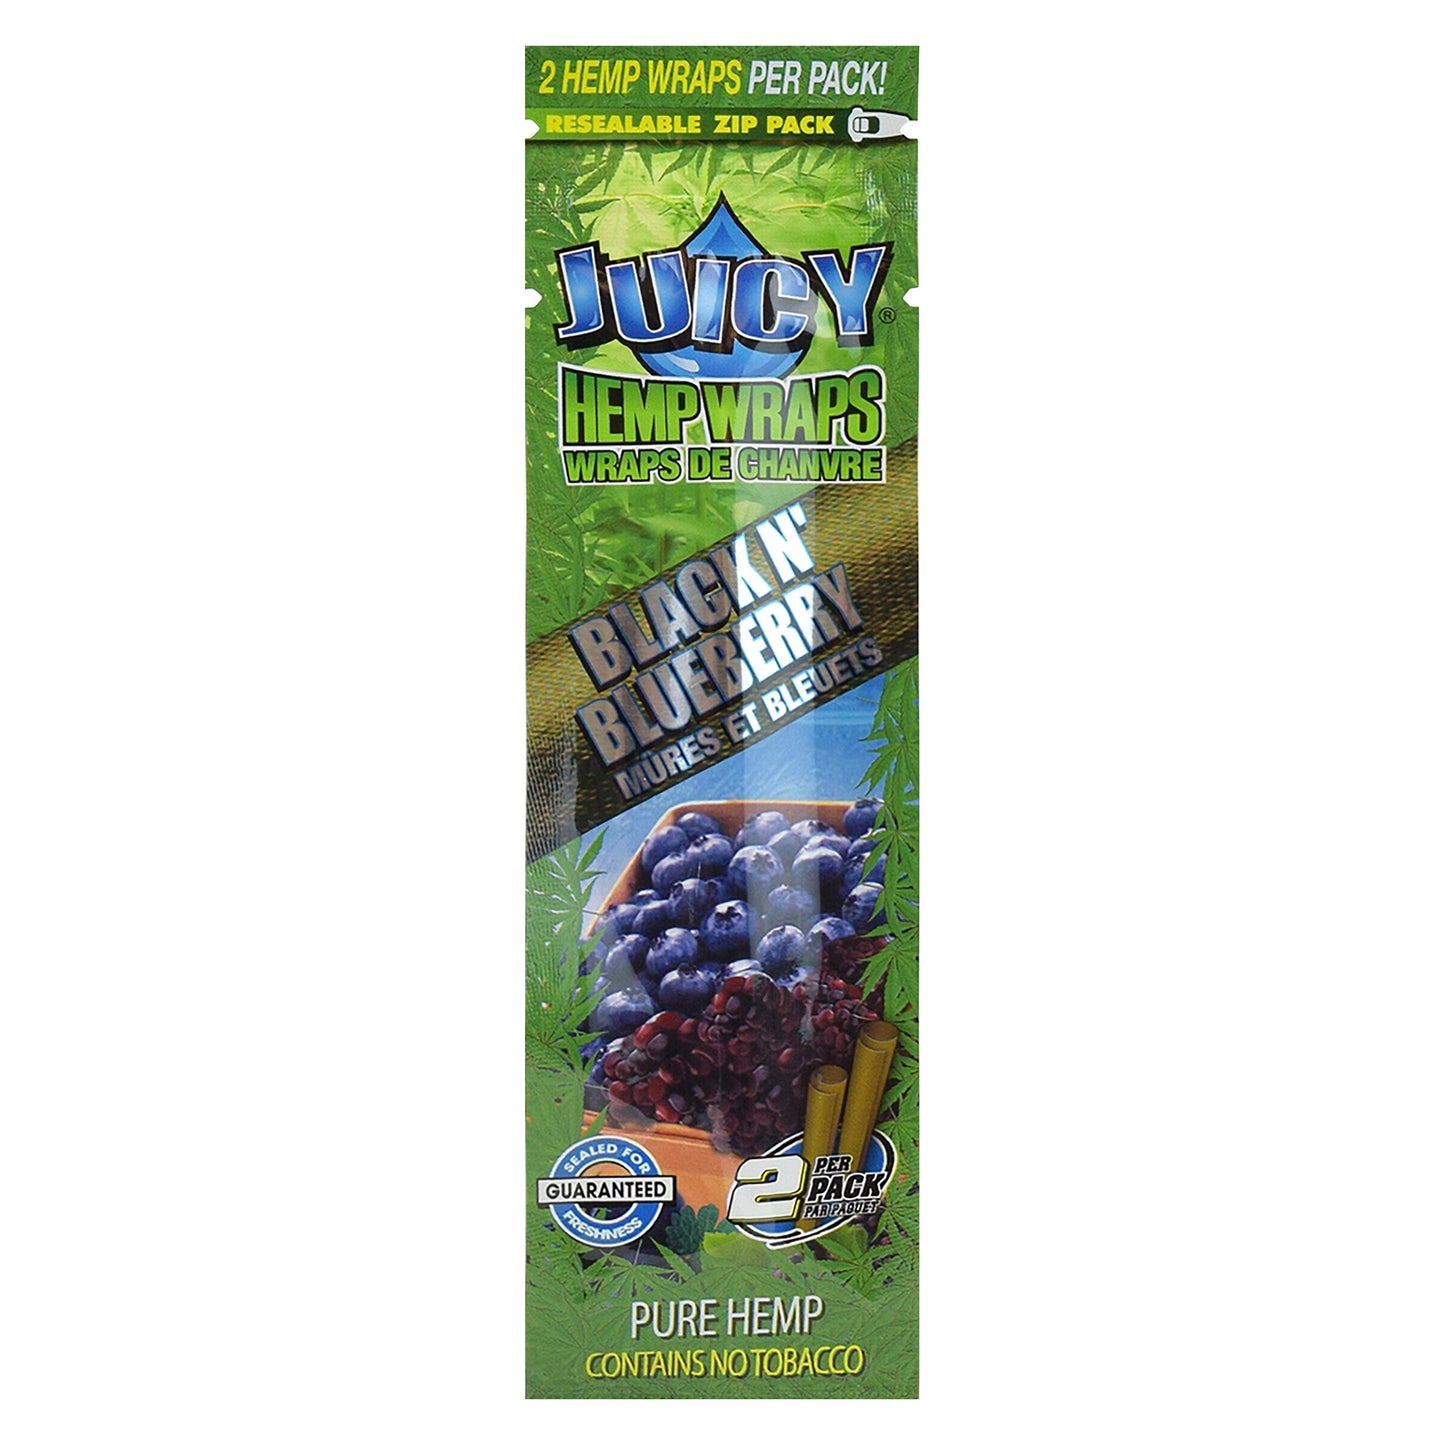 Juicy Jays - Black n' Blueberry Hemp Wraps